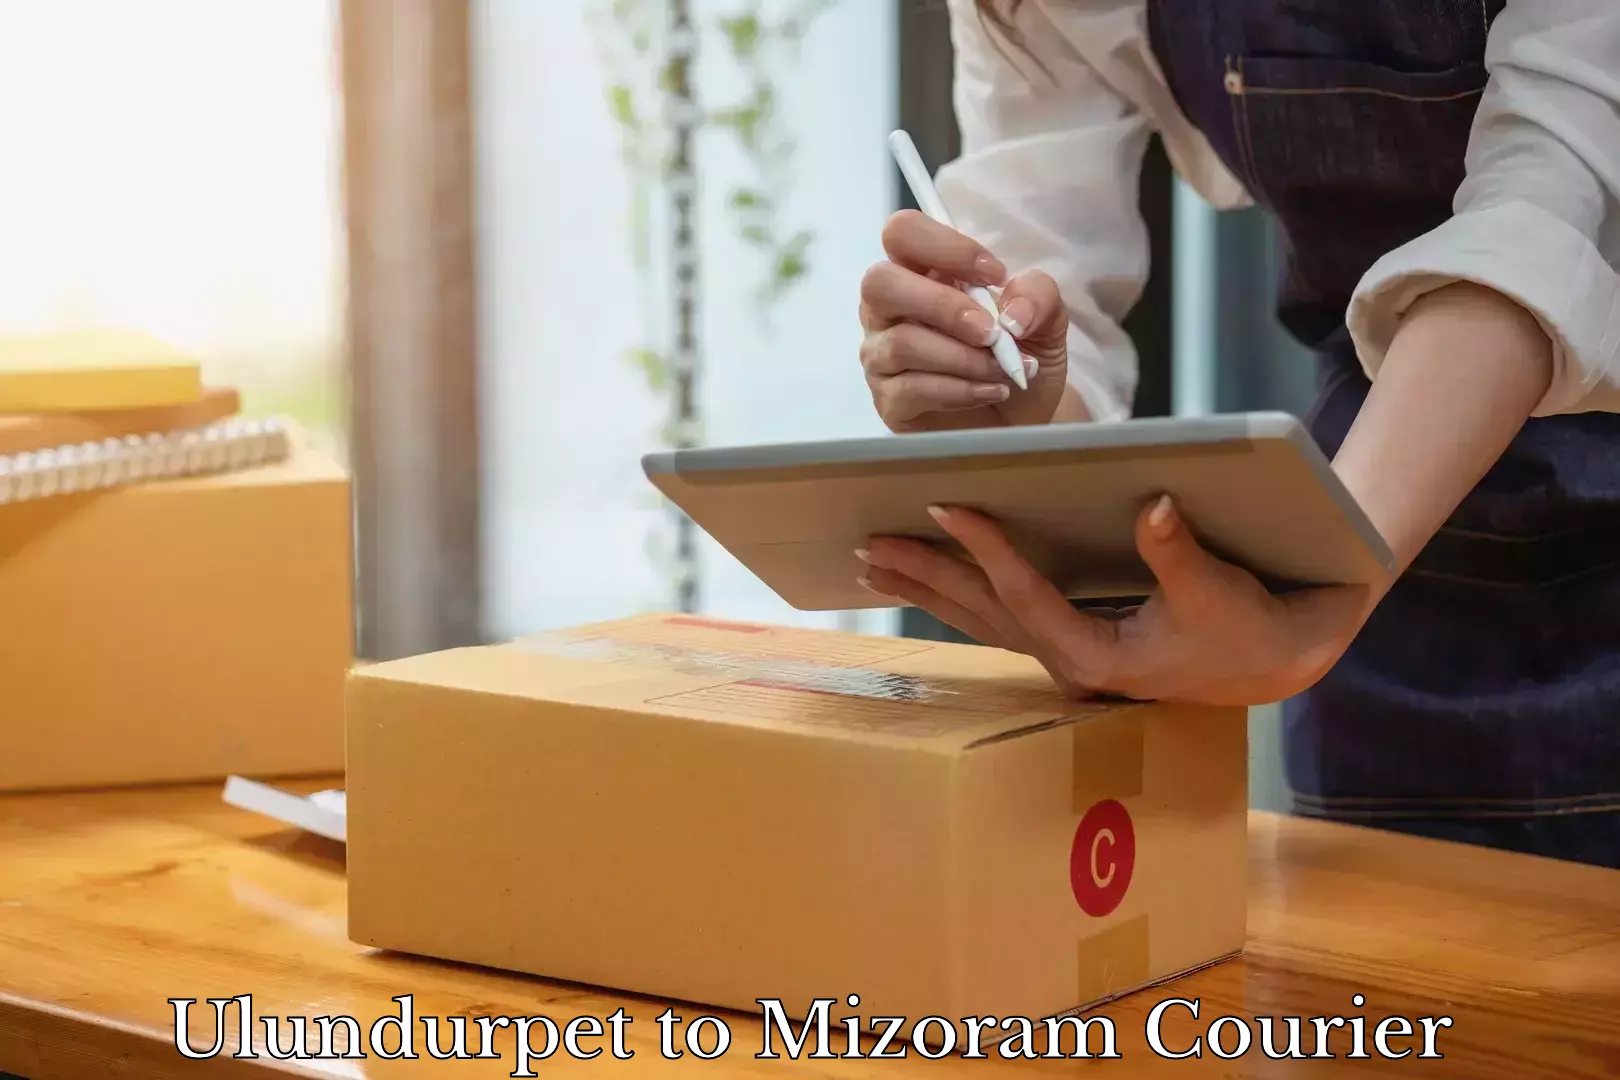 Luggage delivery app Ulundurpet to Mizoram